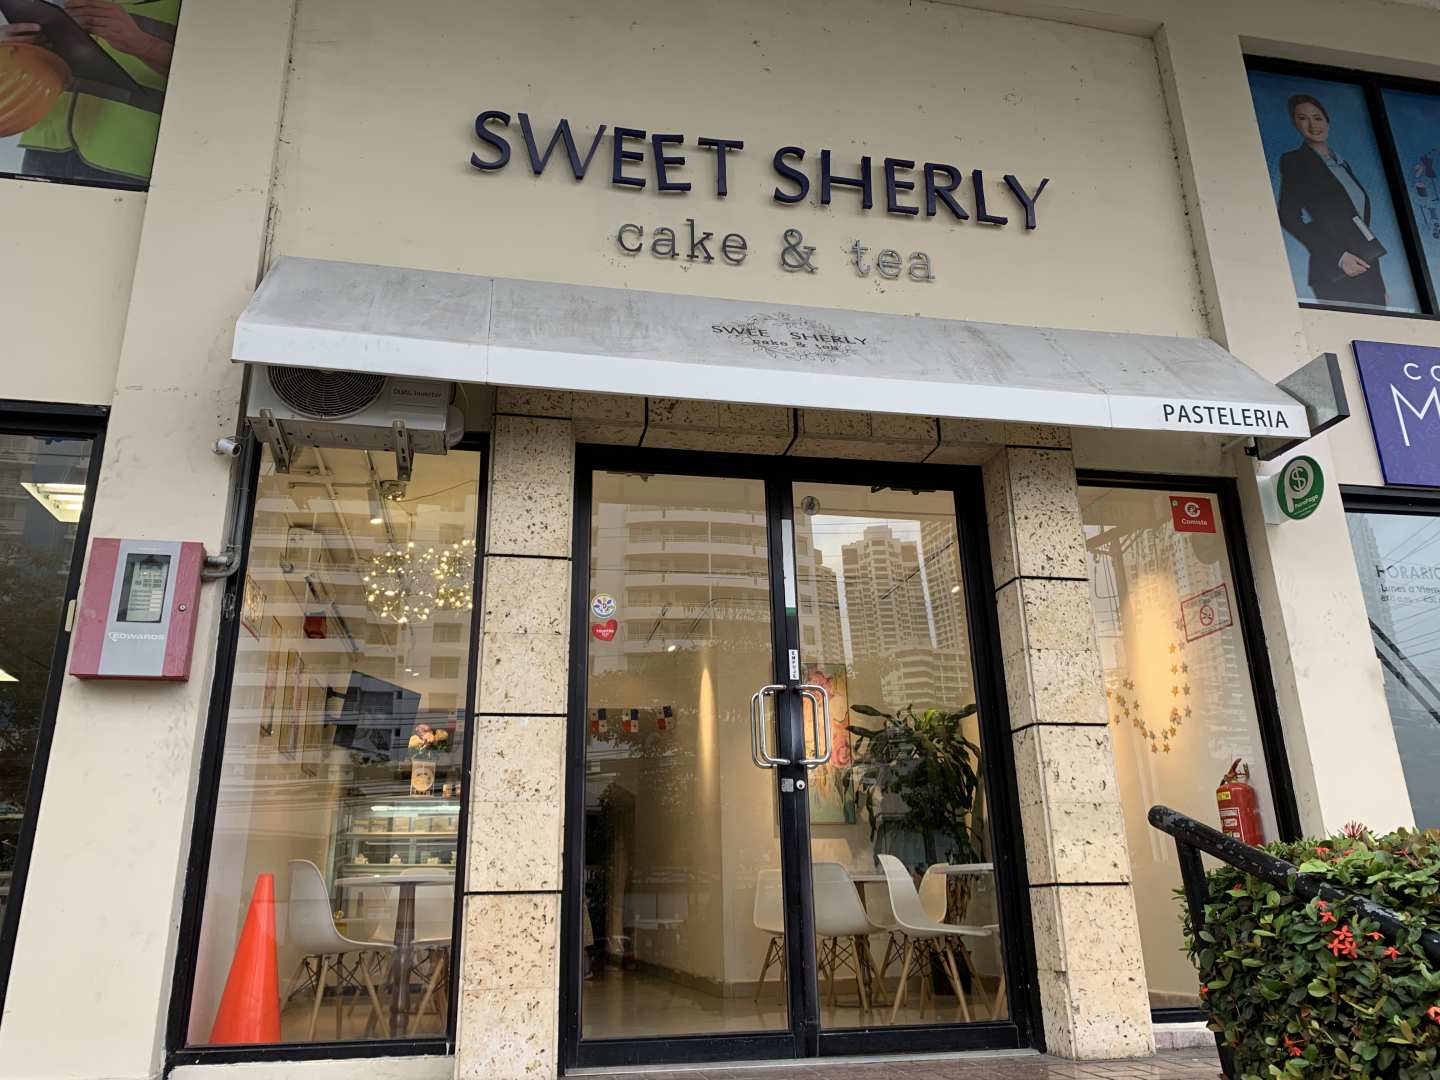 Sweet Sherly